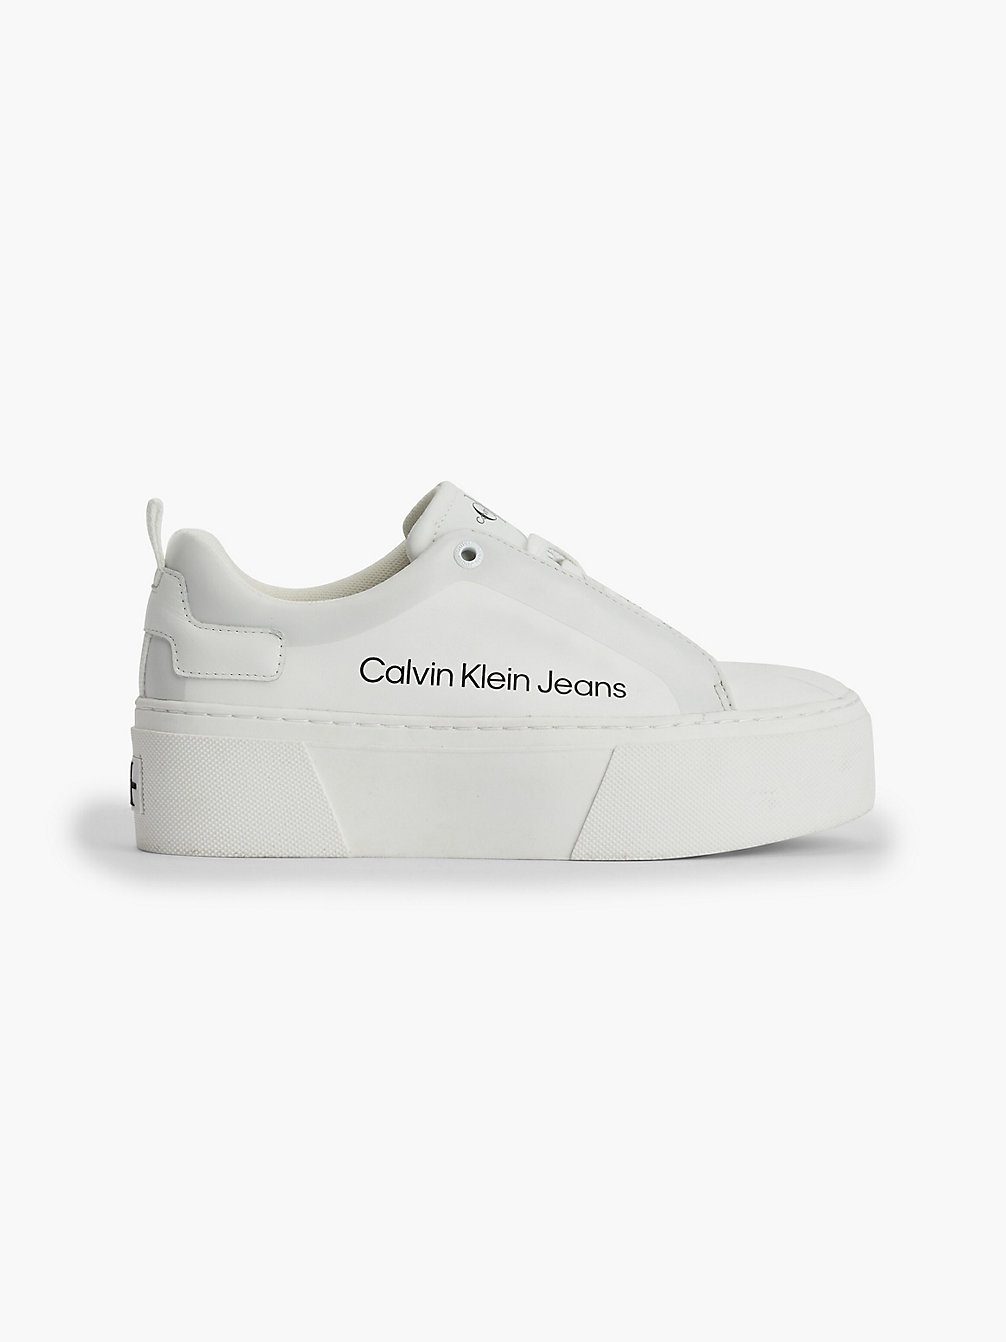 BRIGHT WHITE > Plateau-Sneakers Aus Leder > undefined Damen - Calvin Klein